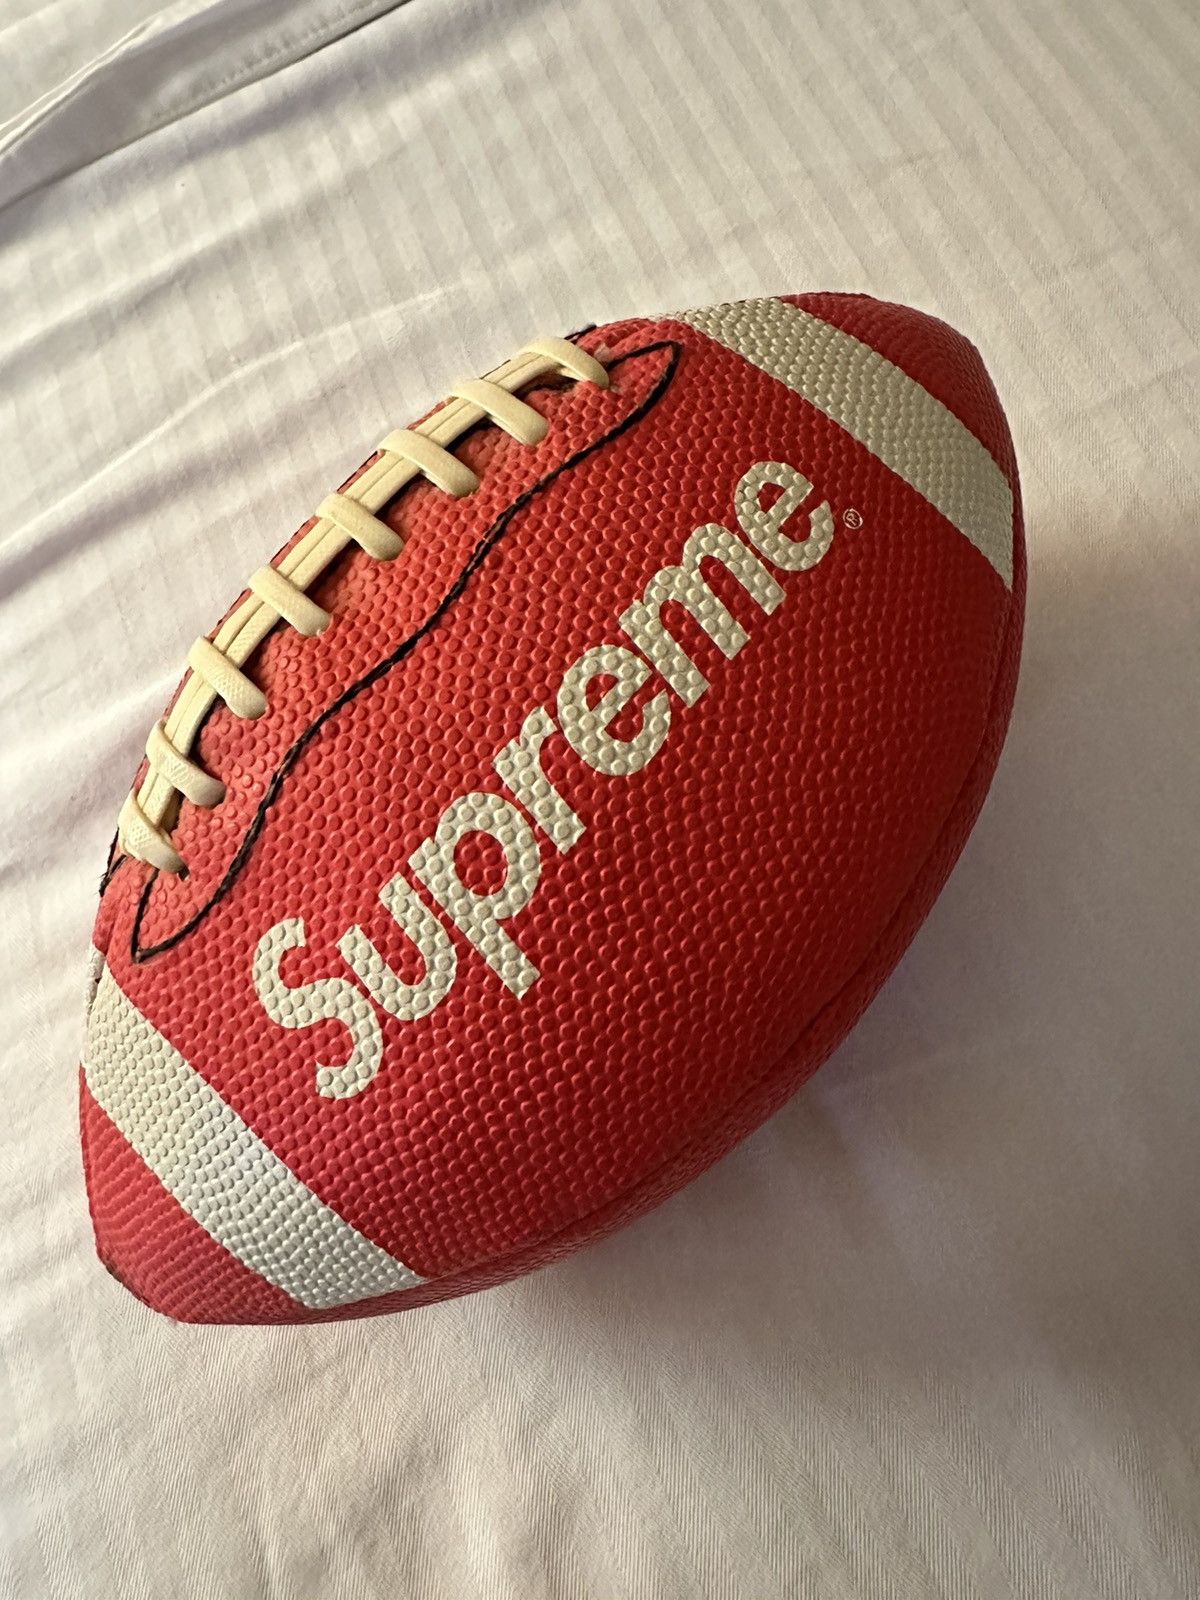 Supreme Supreme x Wilson Mini Football | Grailed